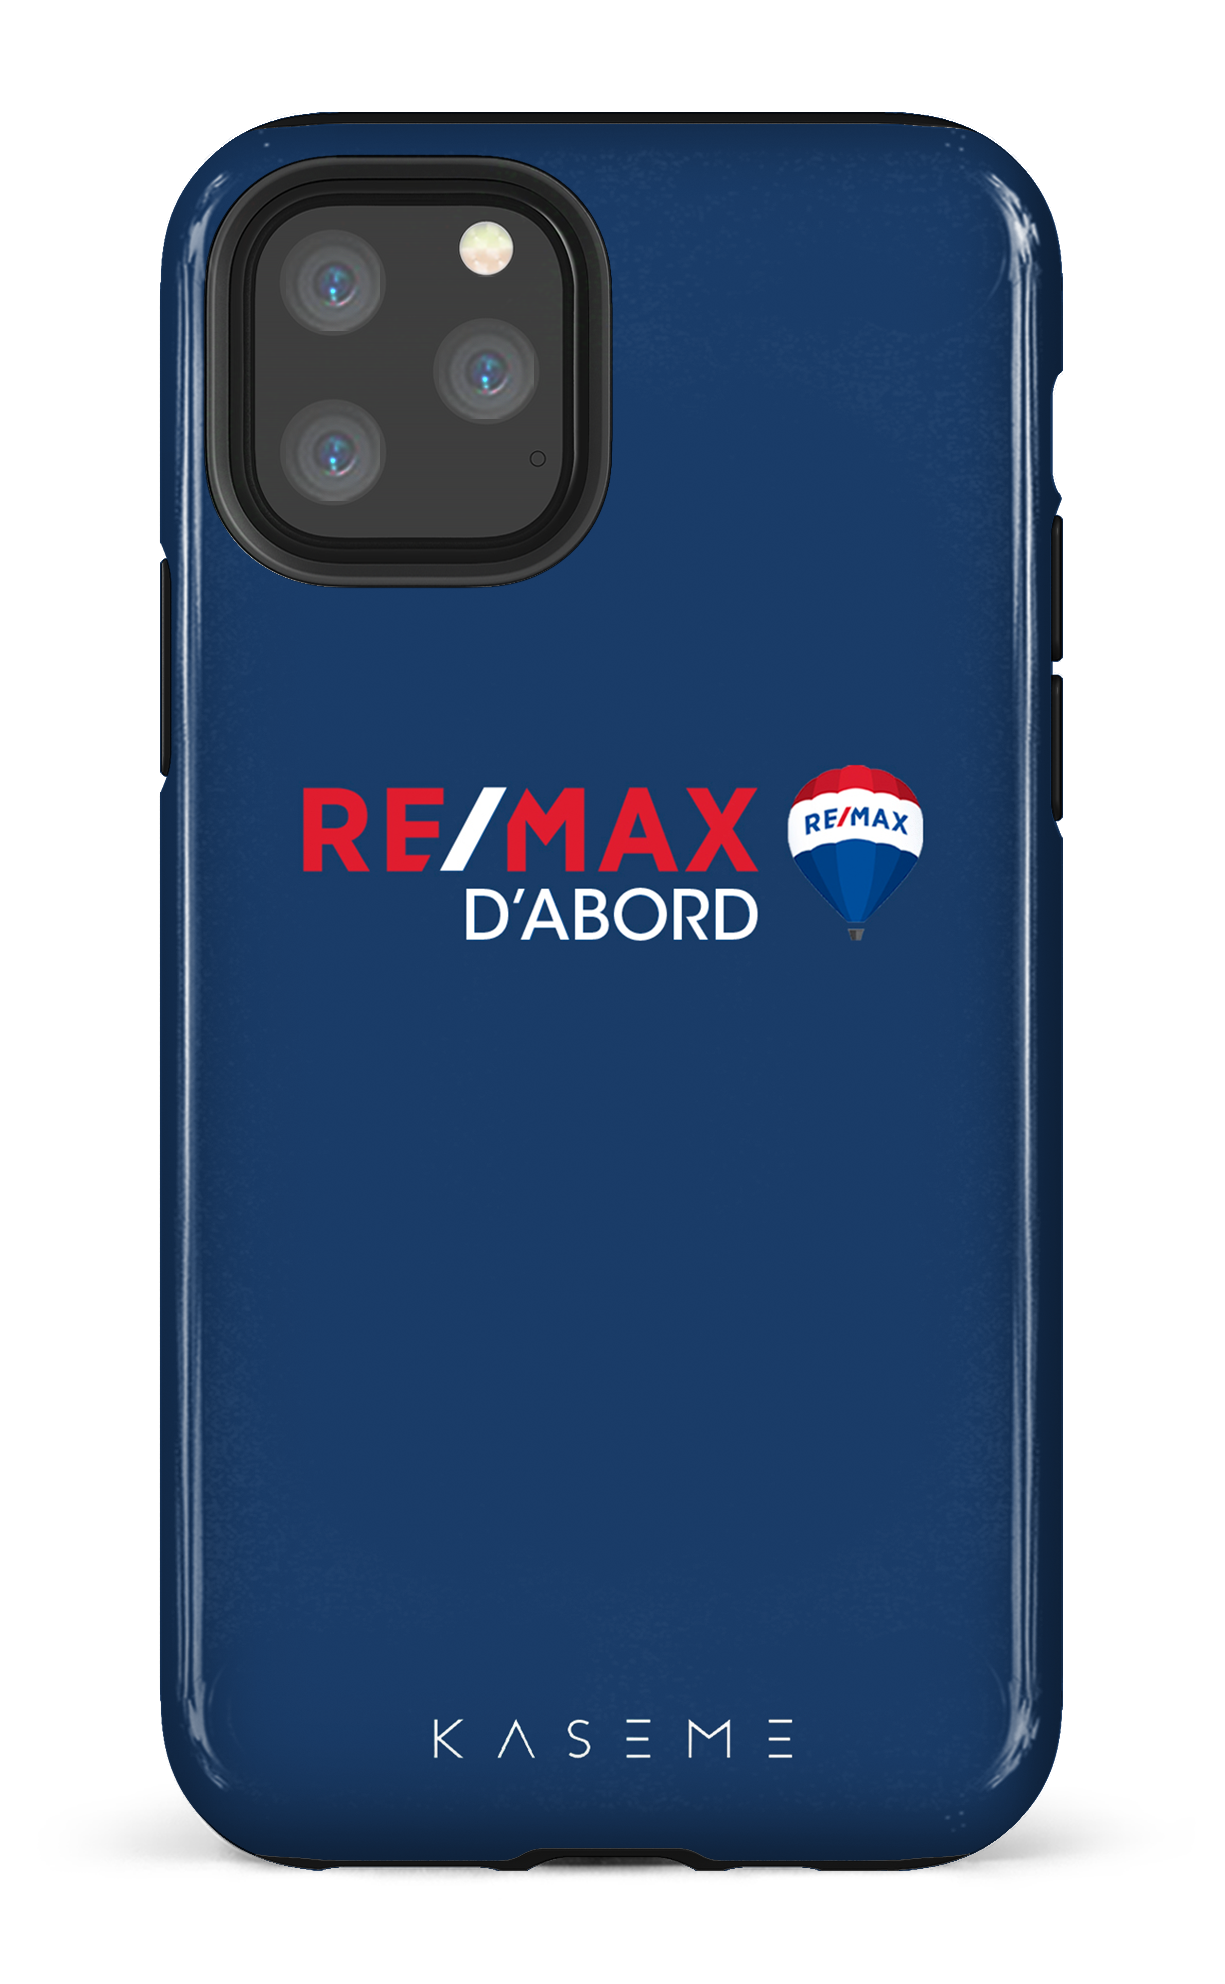 Remax D'abord Bleu - iPhone 11 Pro